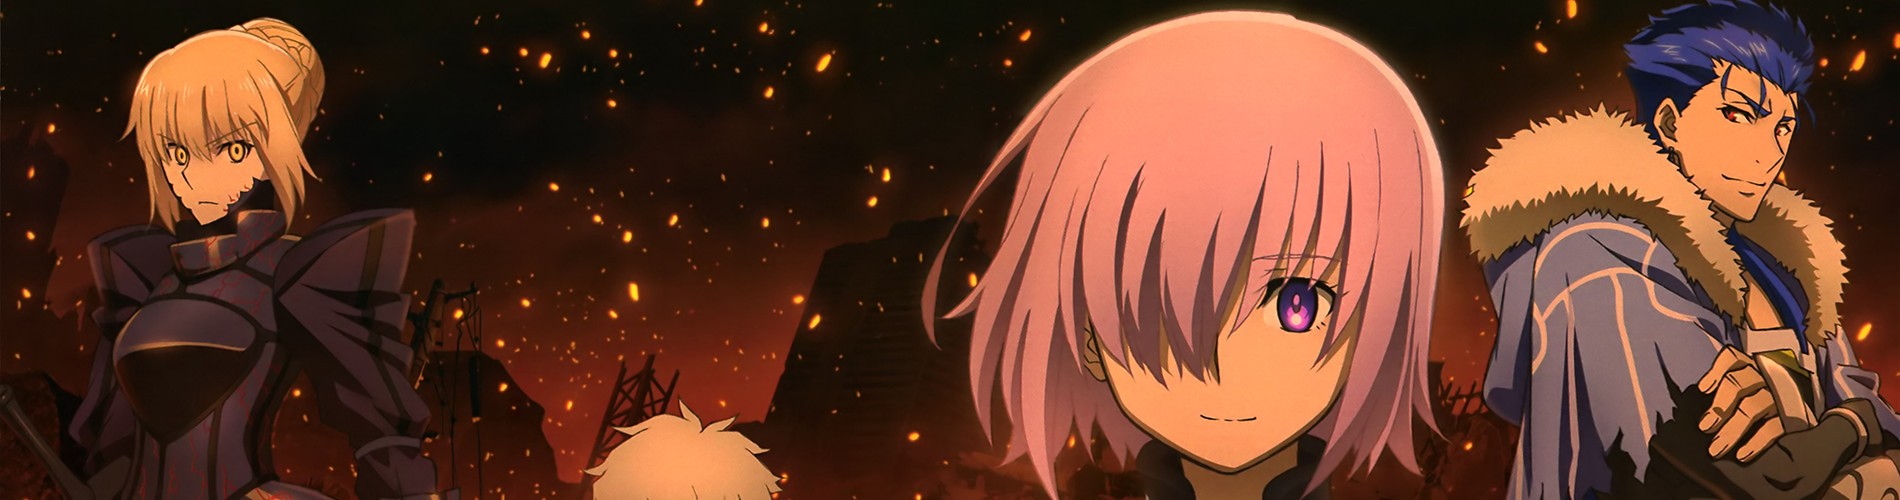 10 Anime Series Like Fate/Grand Order - ReelRundown